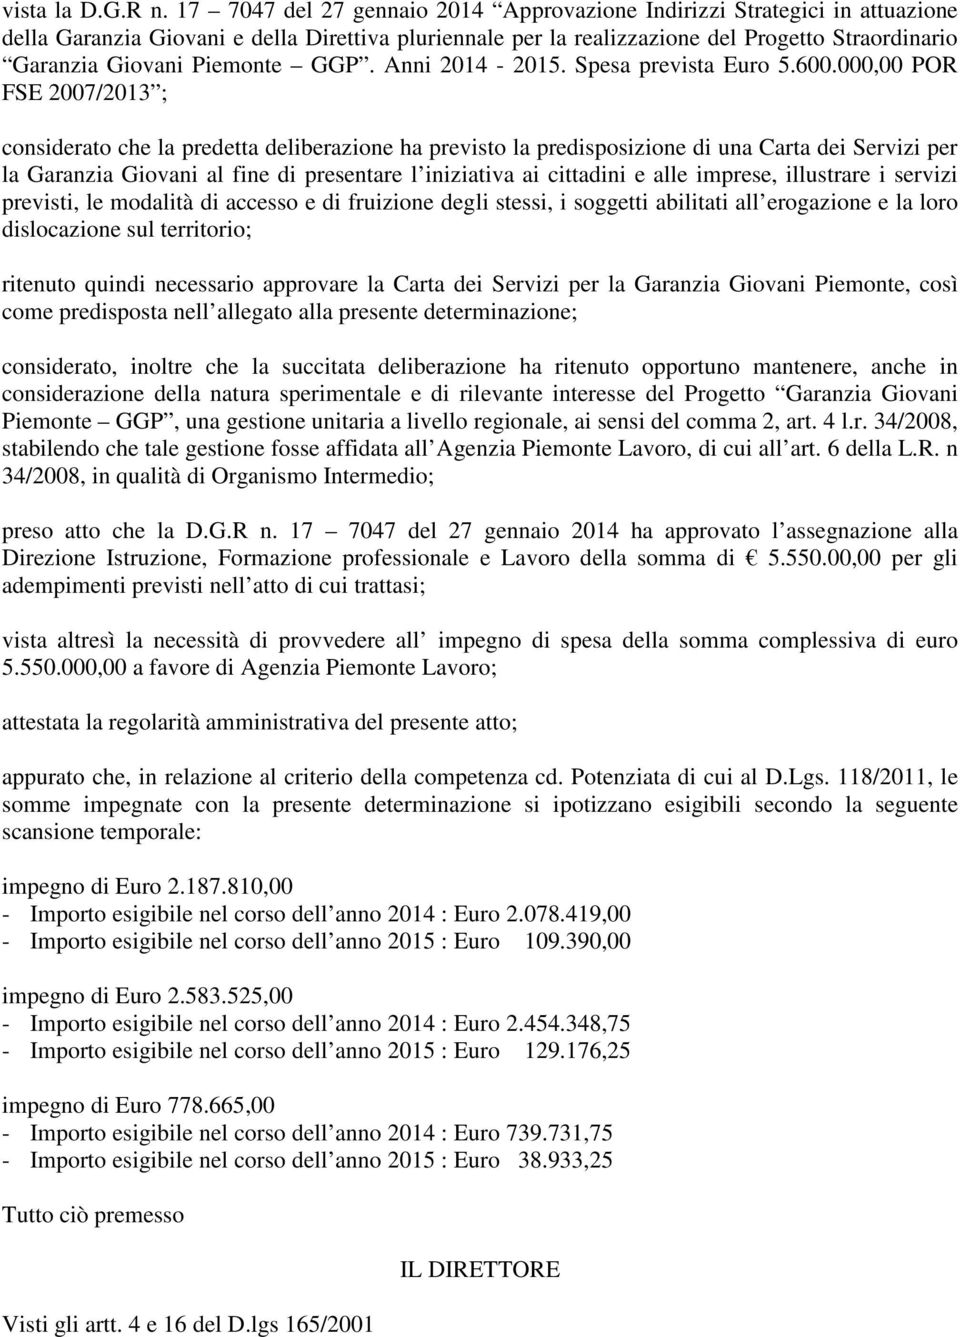 Piemonte GGP. Anni 2014-2015. Spesa prevista Euro 5.600.